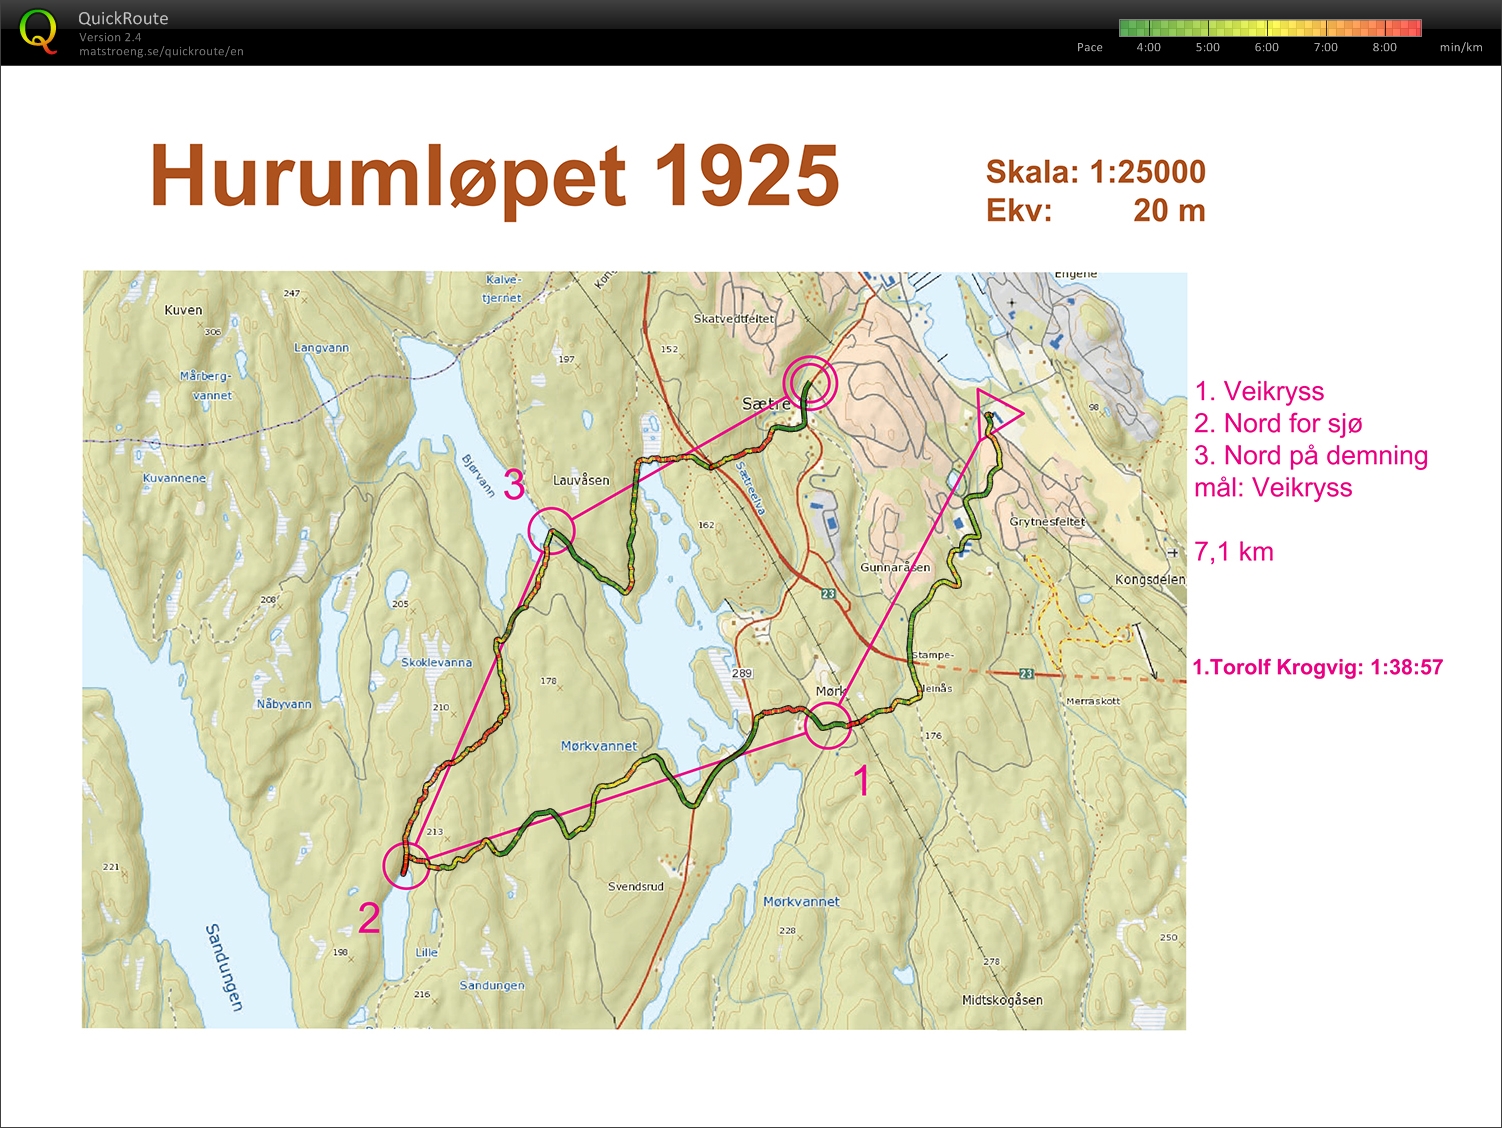 Hurumløpet 1925, Rerun (14-05-2014)